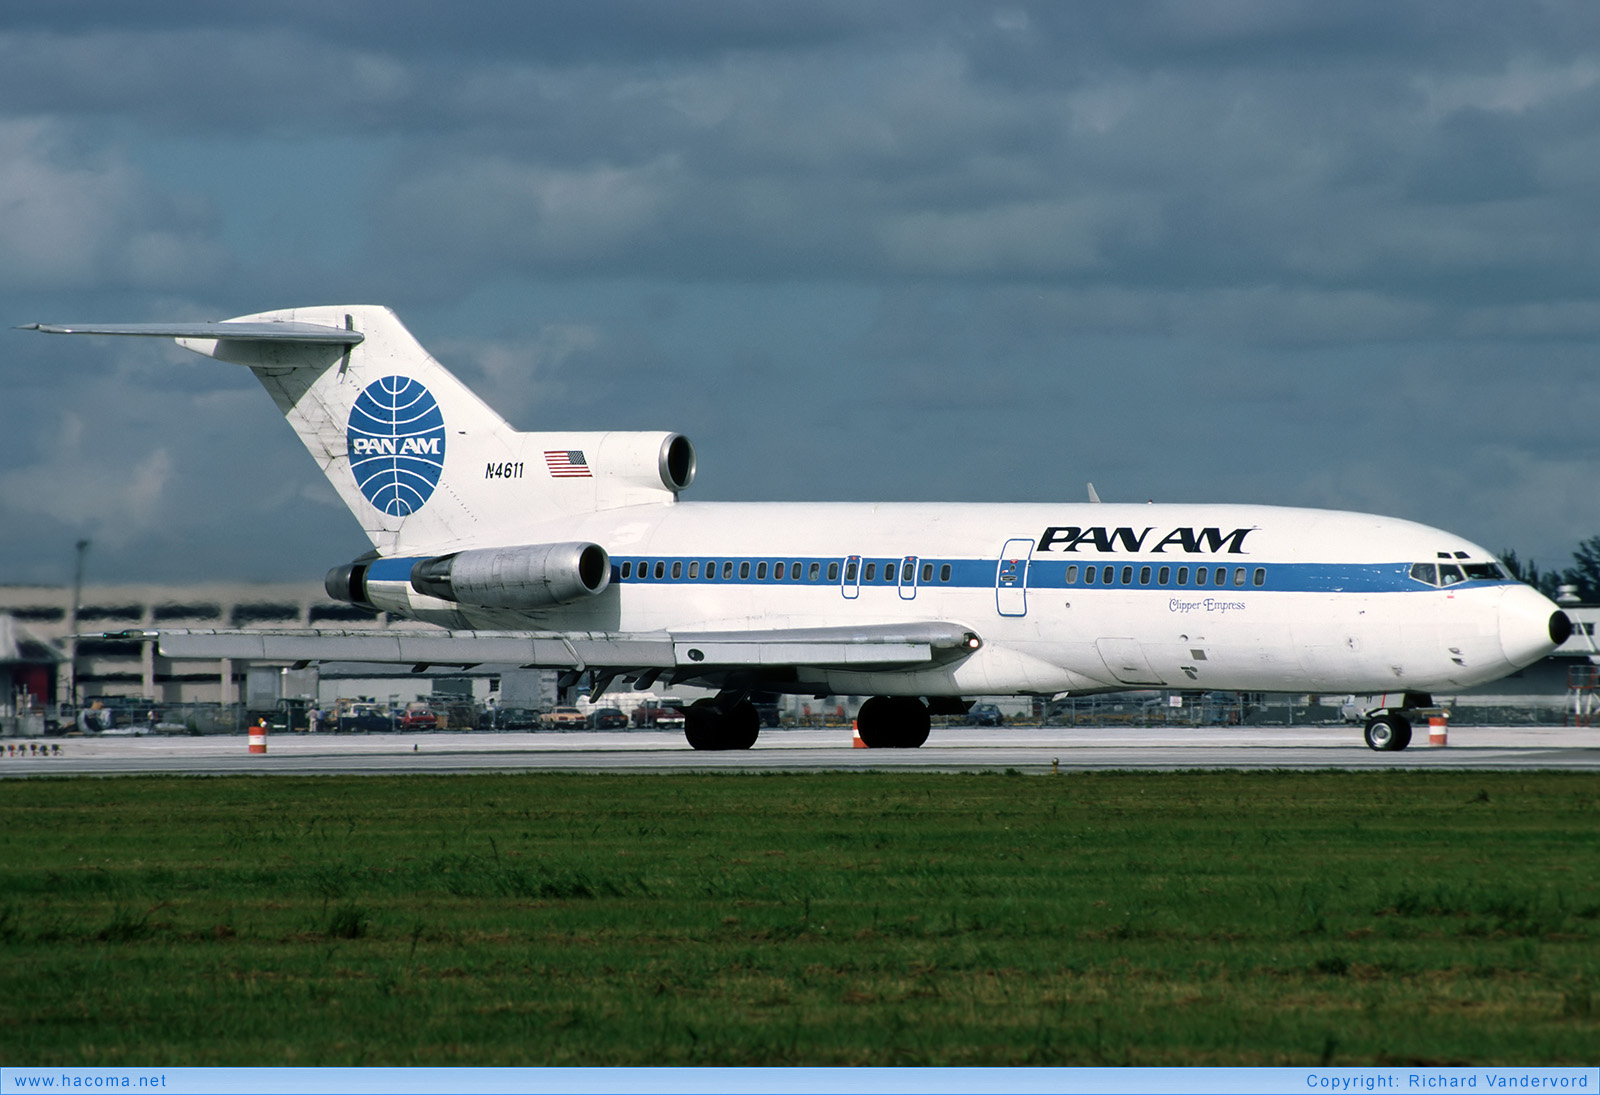 Photo of N4611 - Pan Am Clipper Empress - Miami International Airport - Nov 21, 1986